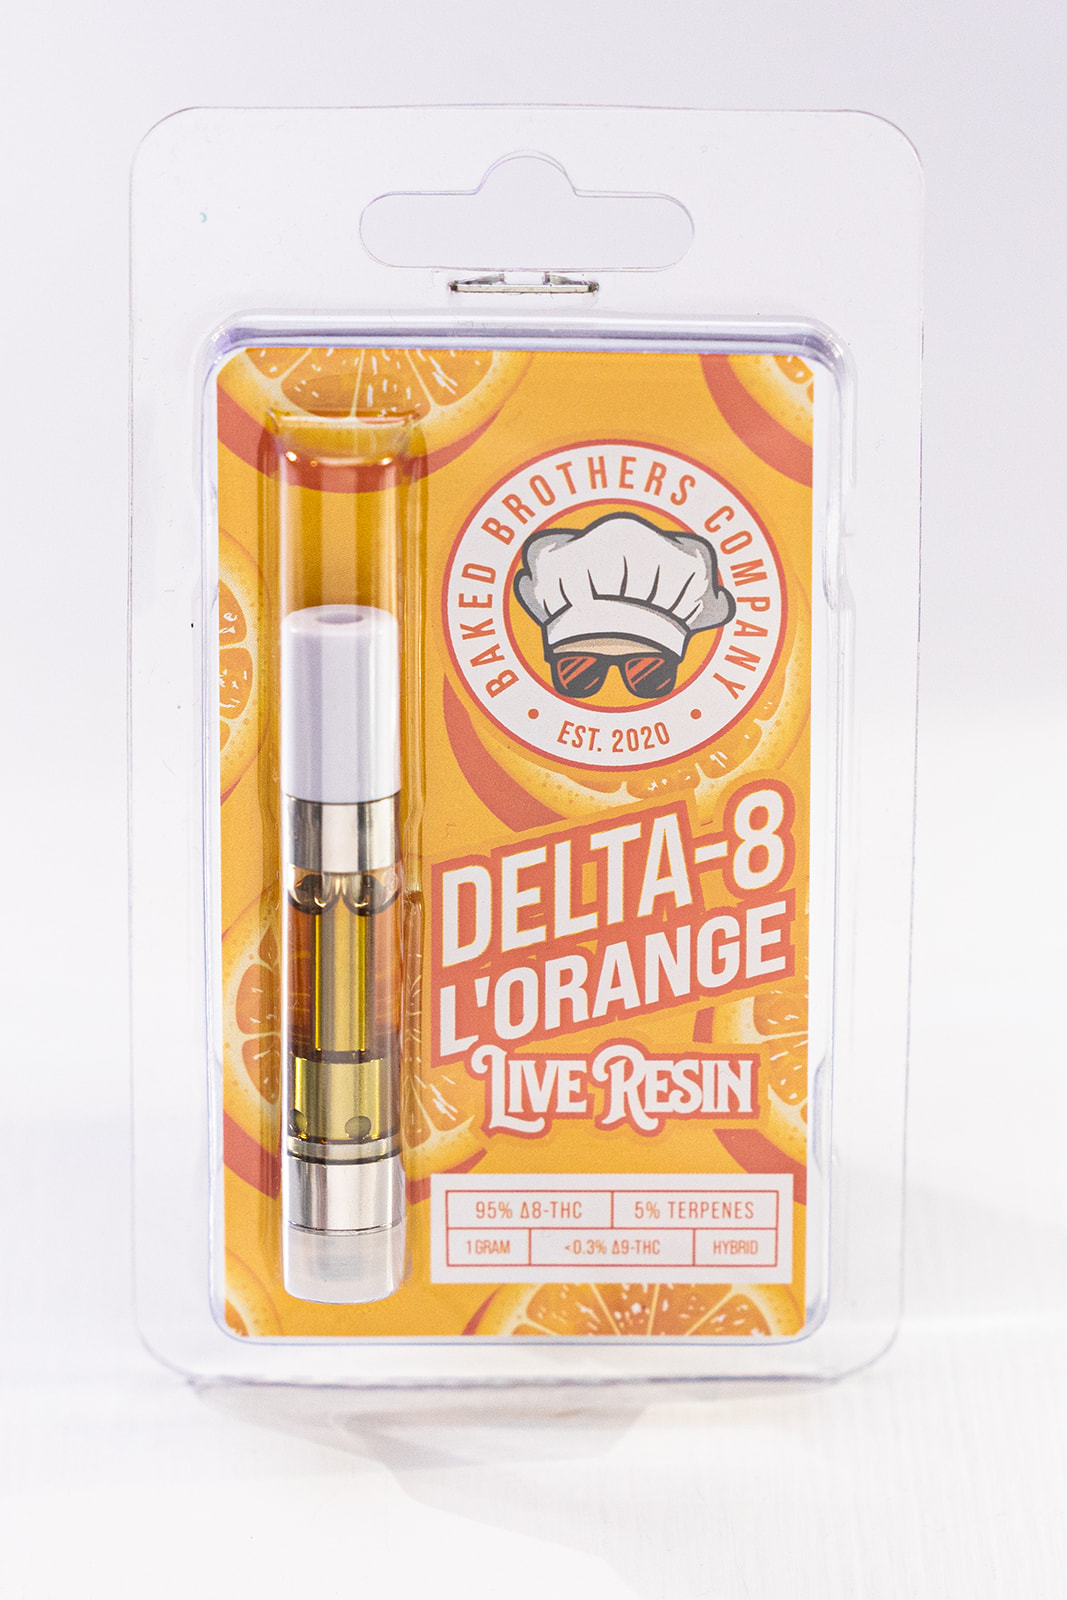 1ml Delta 8 L'Orange Live Resin Cart